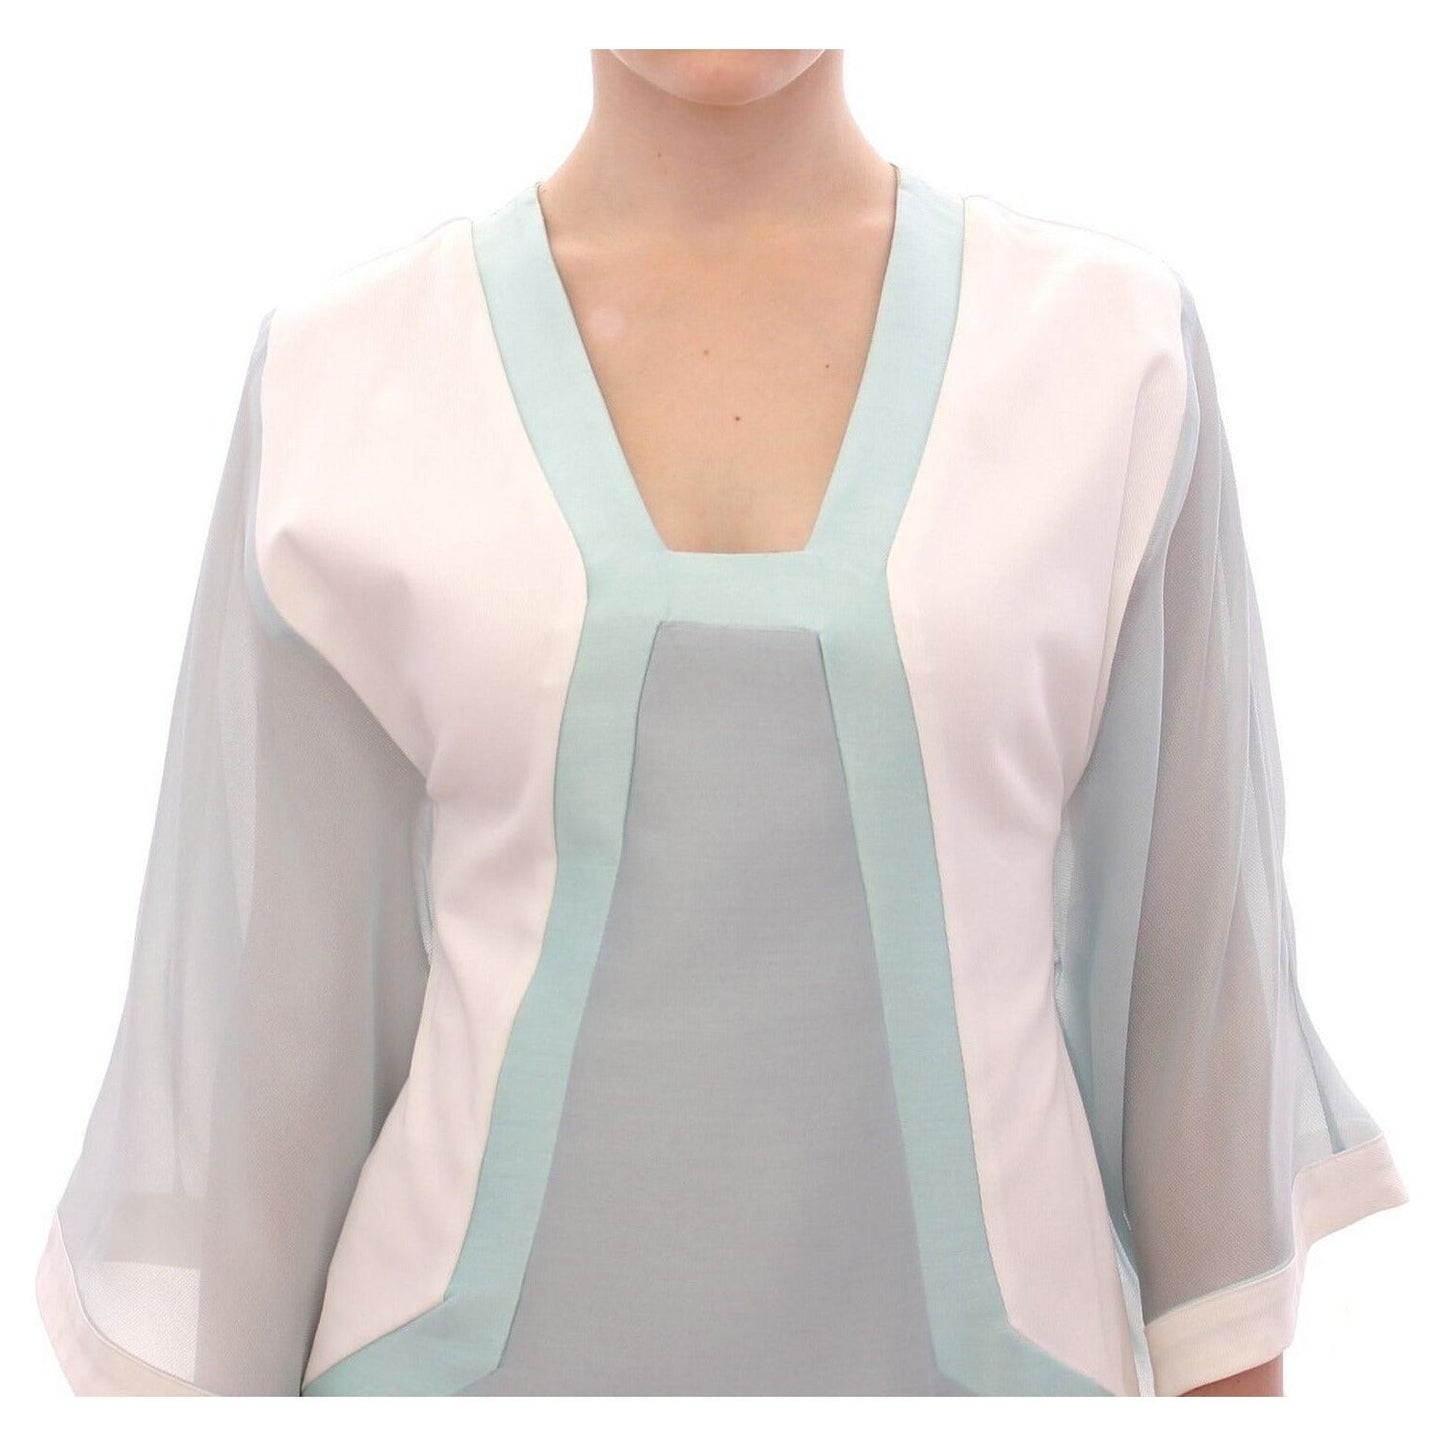 Sergei Grinko Elegant Turquoise Silk Sheath Dress white-silk-sheath-formal-turquoise-dress WOMAN DRESSES s-l1600-29-2-e53bb015-4d8.jpg